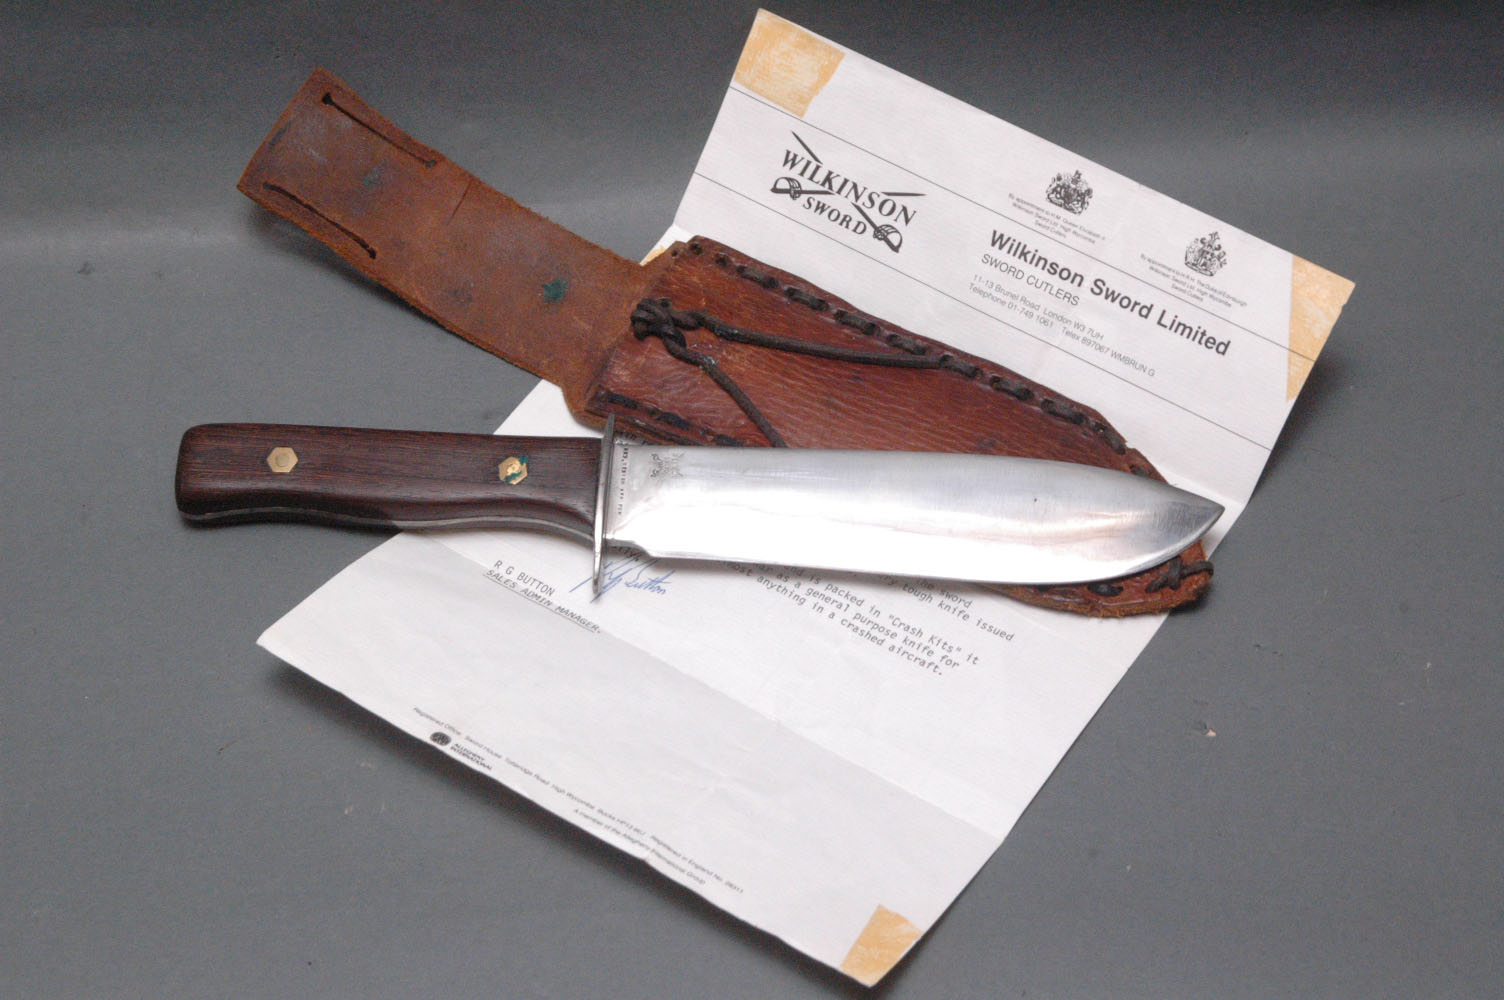 Wilkinson Sword Survival knife, blade stamped Wilkinson Sword Ltd.